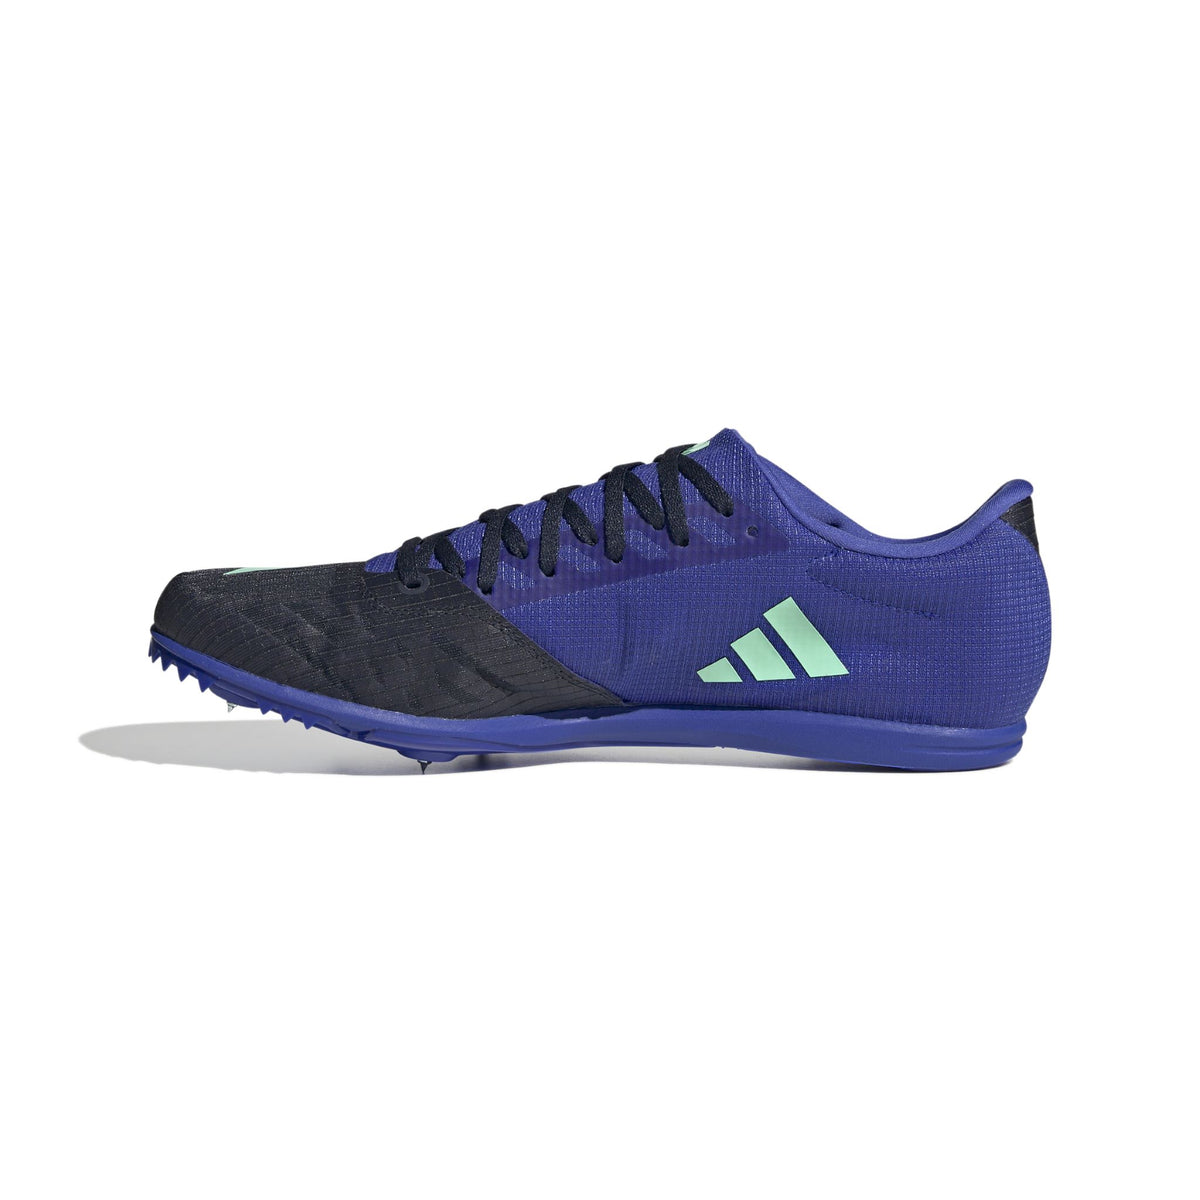 Adidas Distancestar Mens Running Spikes: Black/Blue